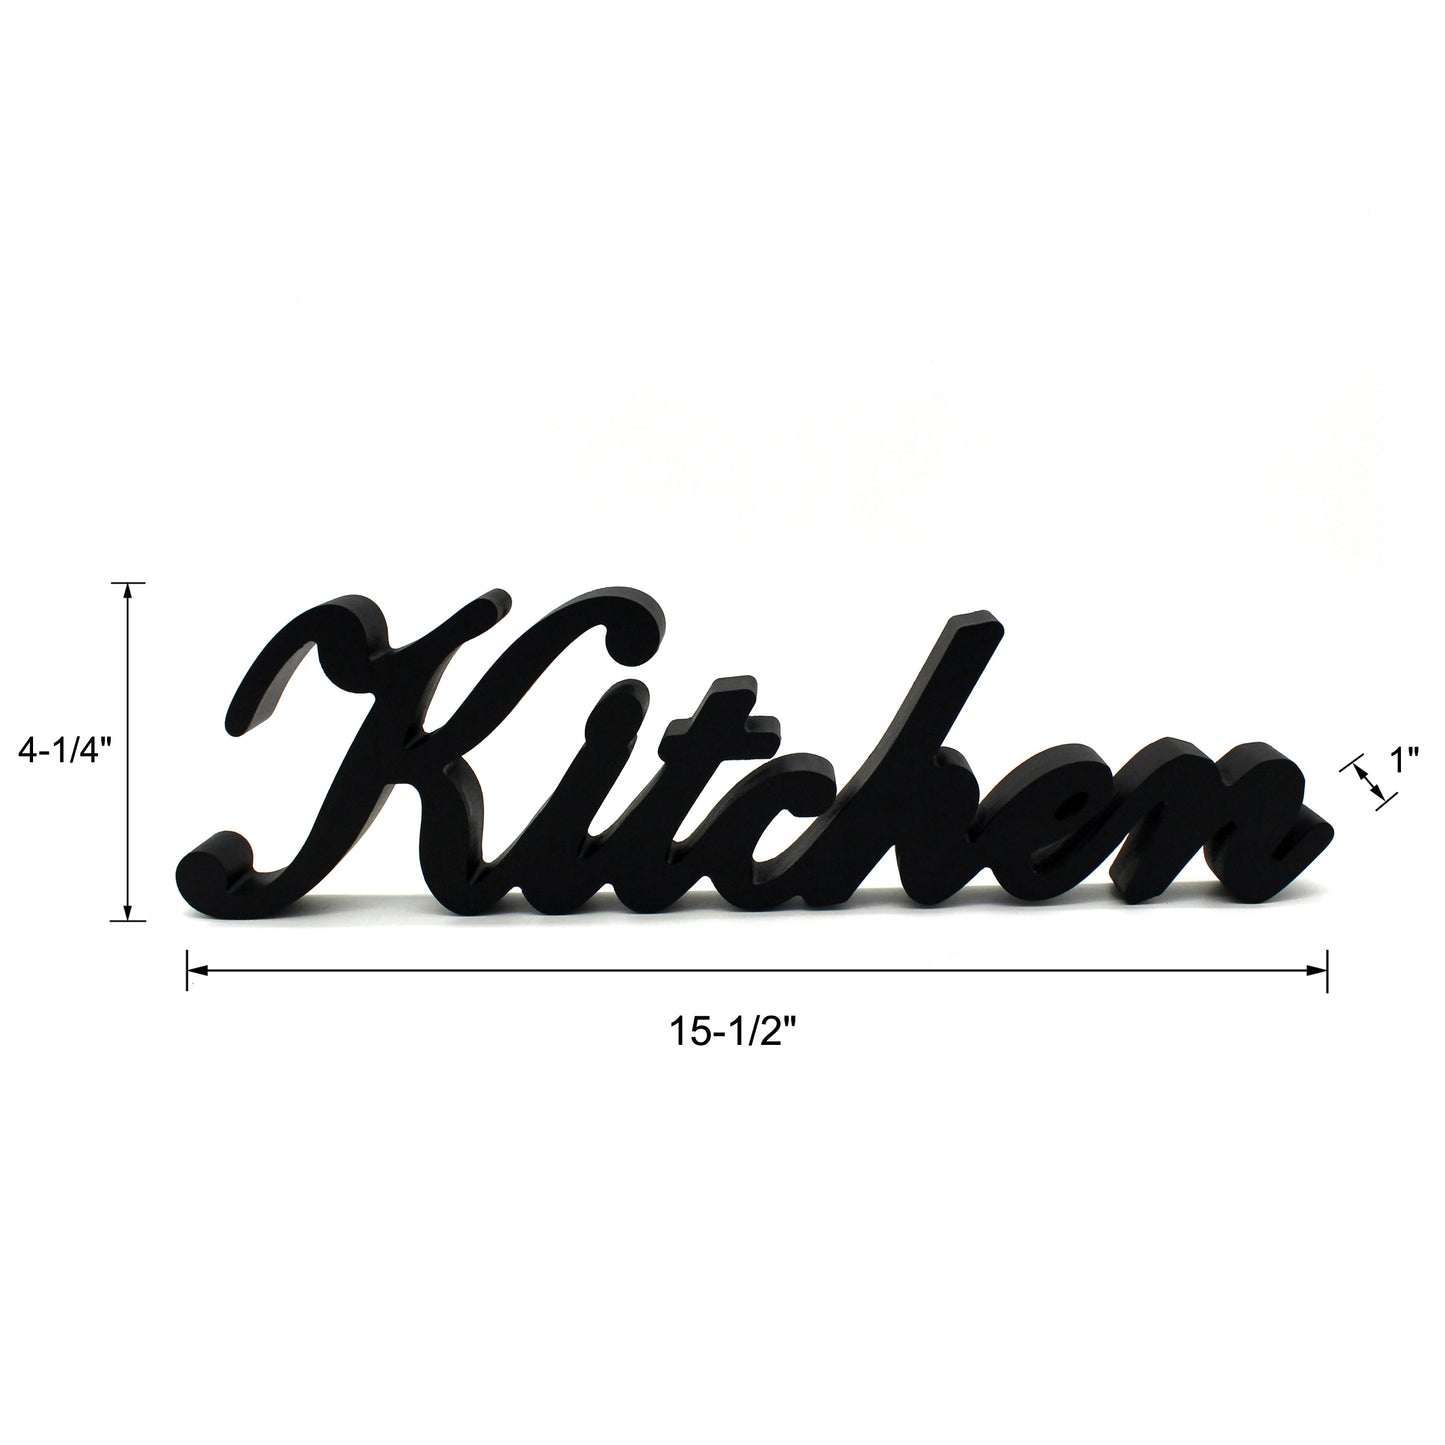 CVHOMEDECO. Rustic Matt Black Wooden Words Sign Free Standing "Kitchen" Desk/Table/Shelf/Door/Home Wall Decoration Art, 15.5 x 4.25 x 1 Inch